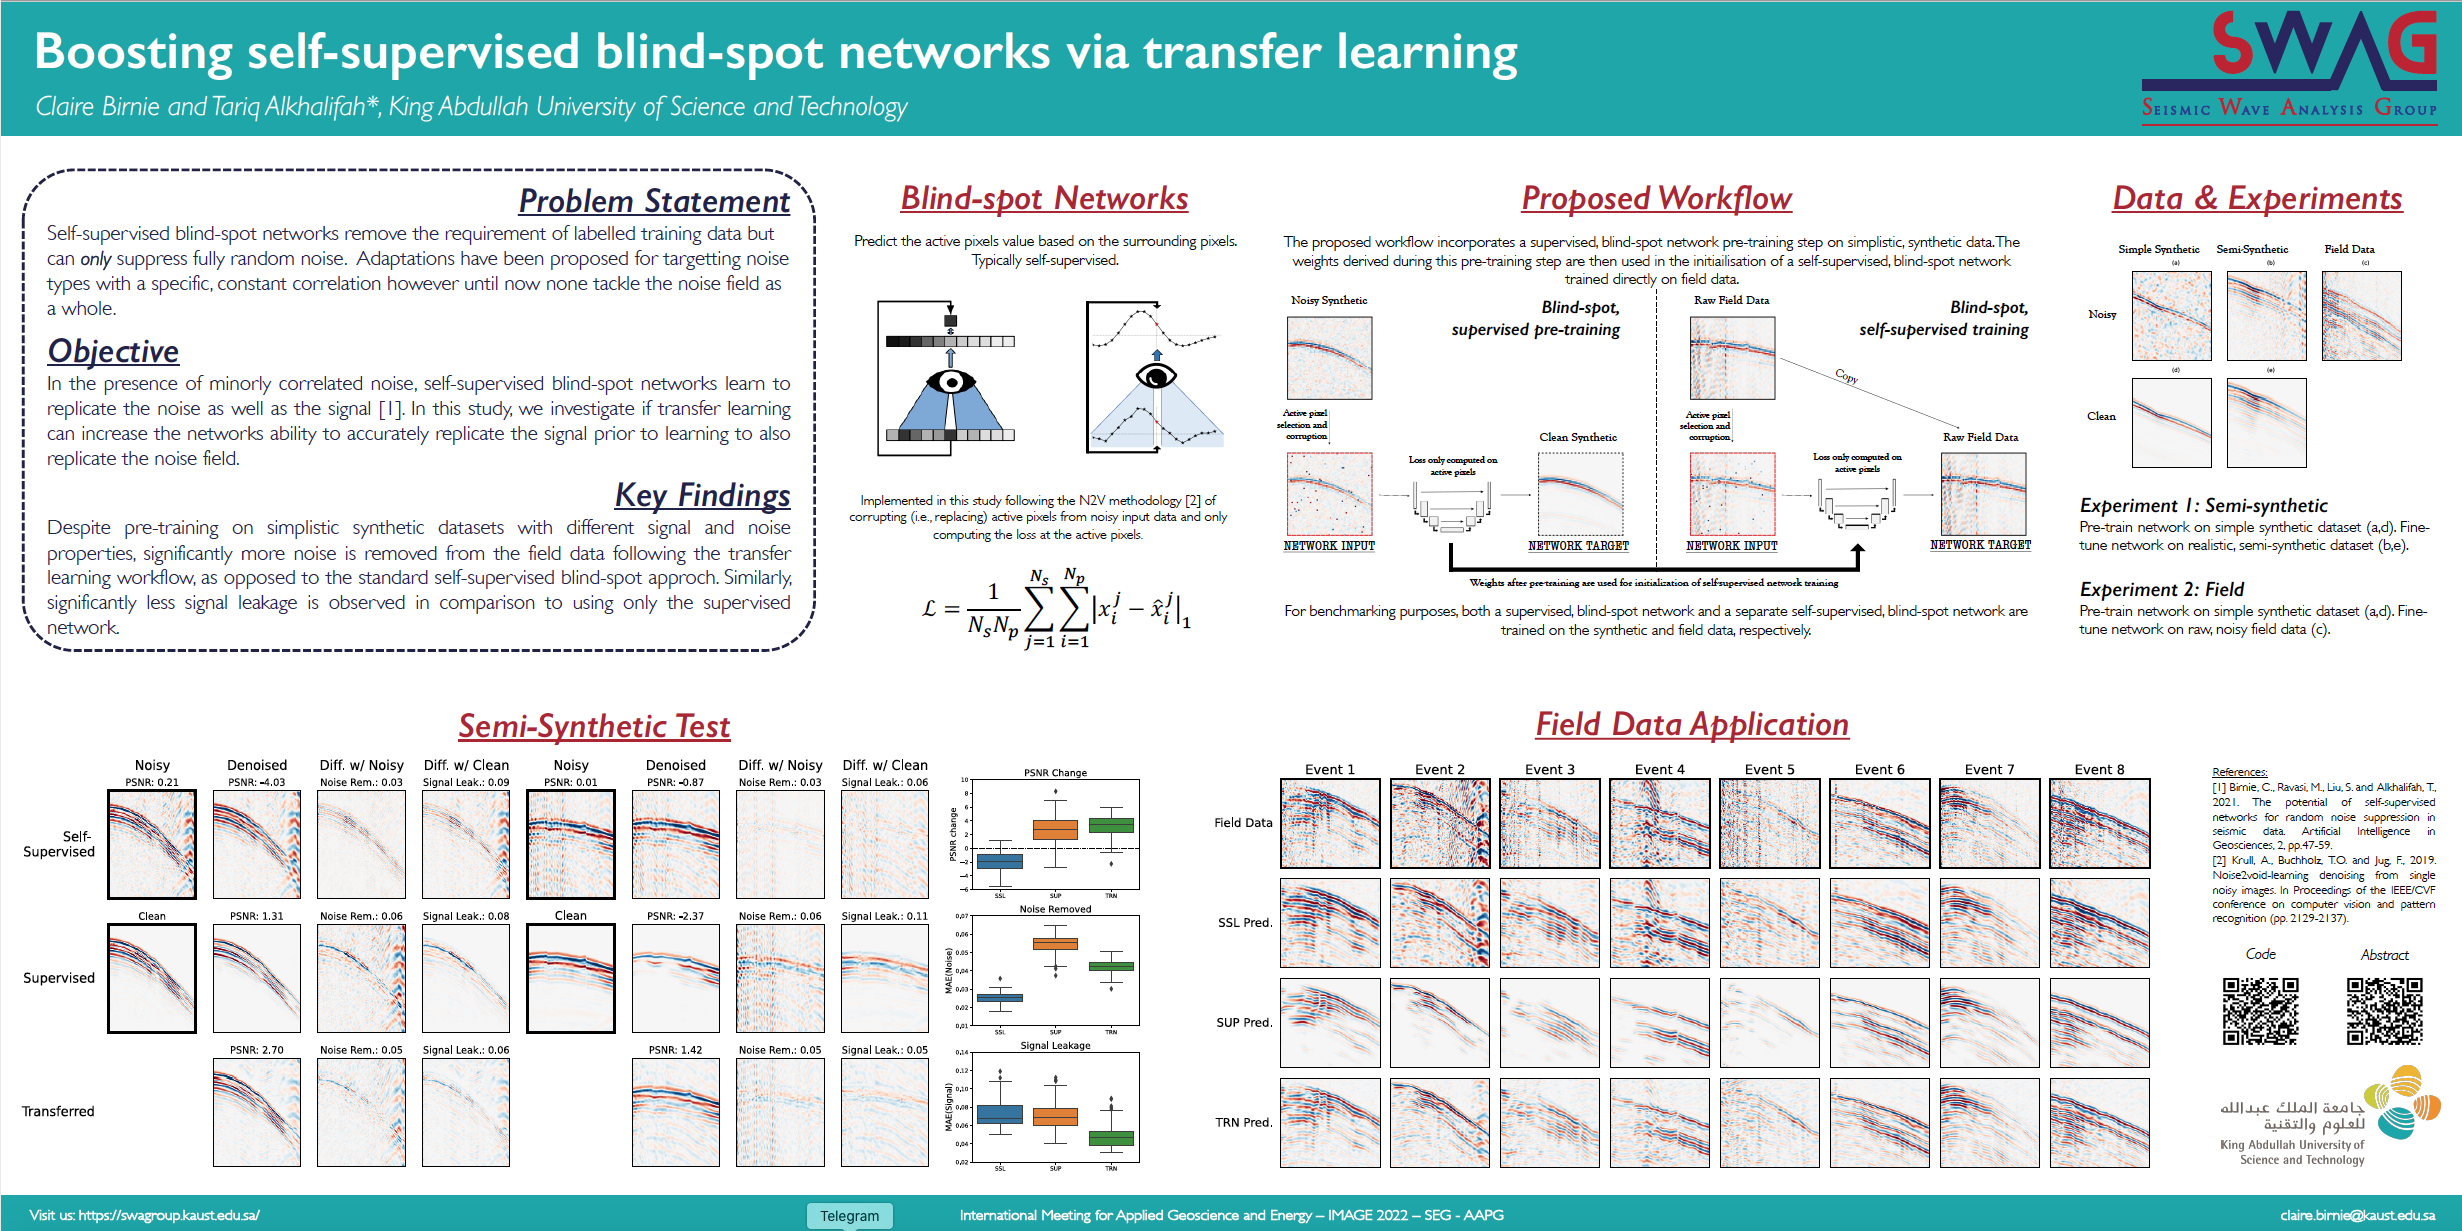 Claire Birnie - Boosting self-supervised blind-spot networks via transfer learning